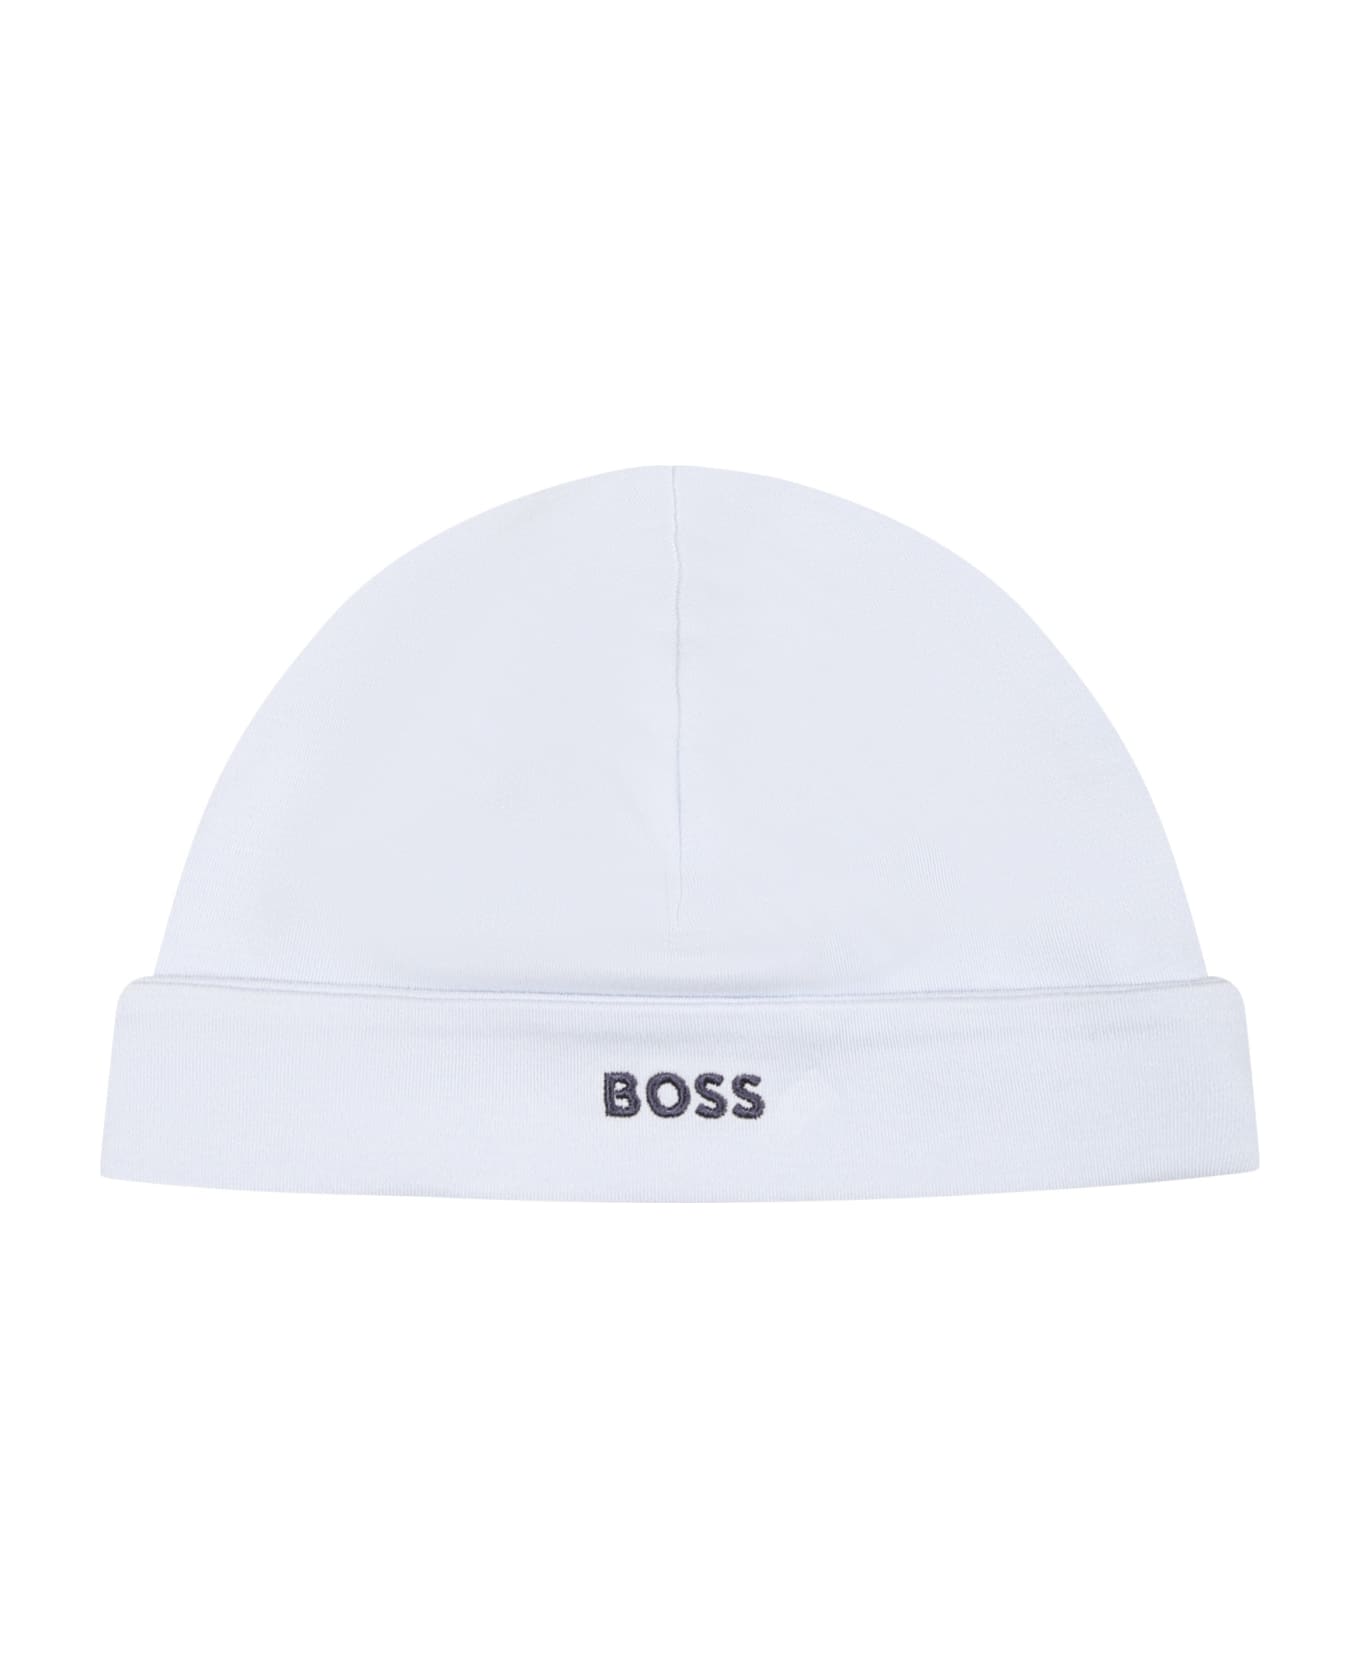 Hugo Boss Light Blue Hat For Baby Boy With Logo - Light Blue アクセサリー＆ギフト